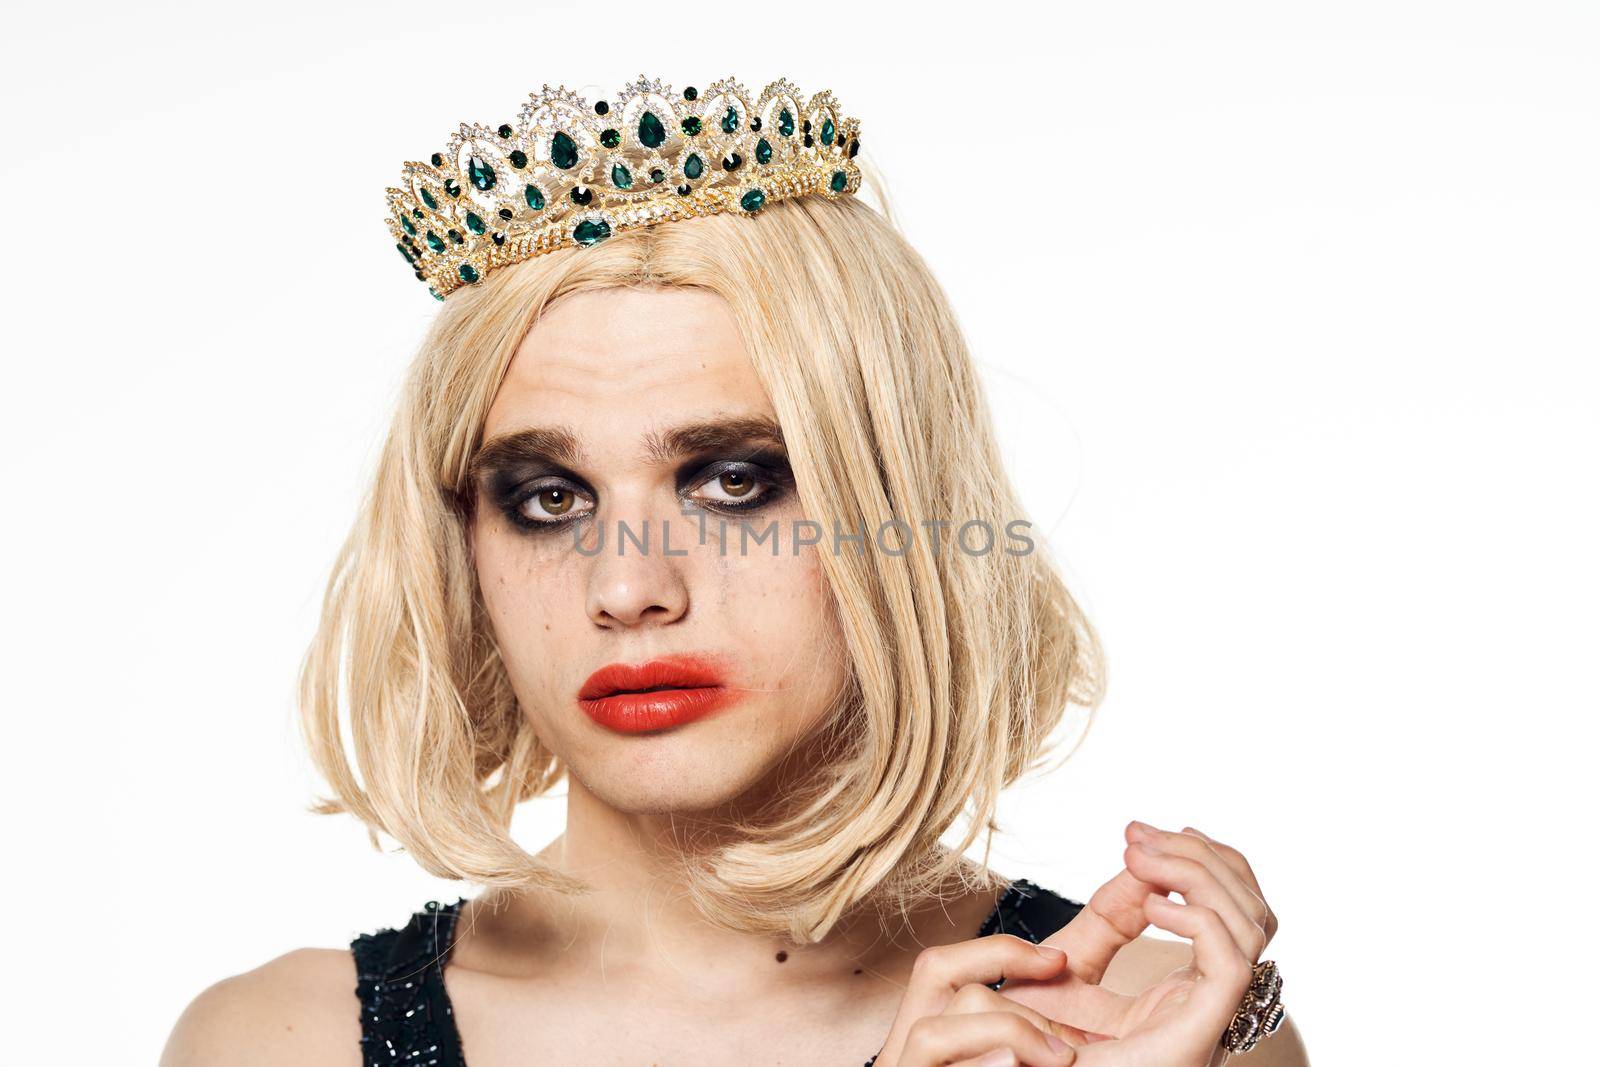 man in womens wig crossdresser makeup lgbt community by Vichizh